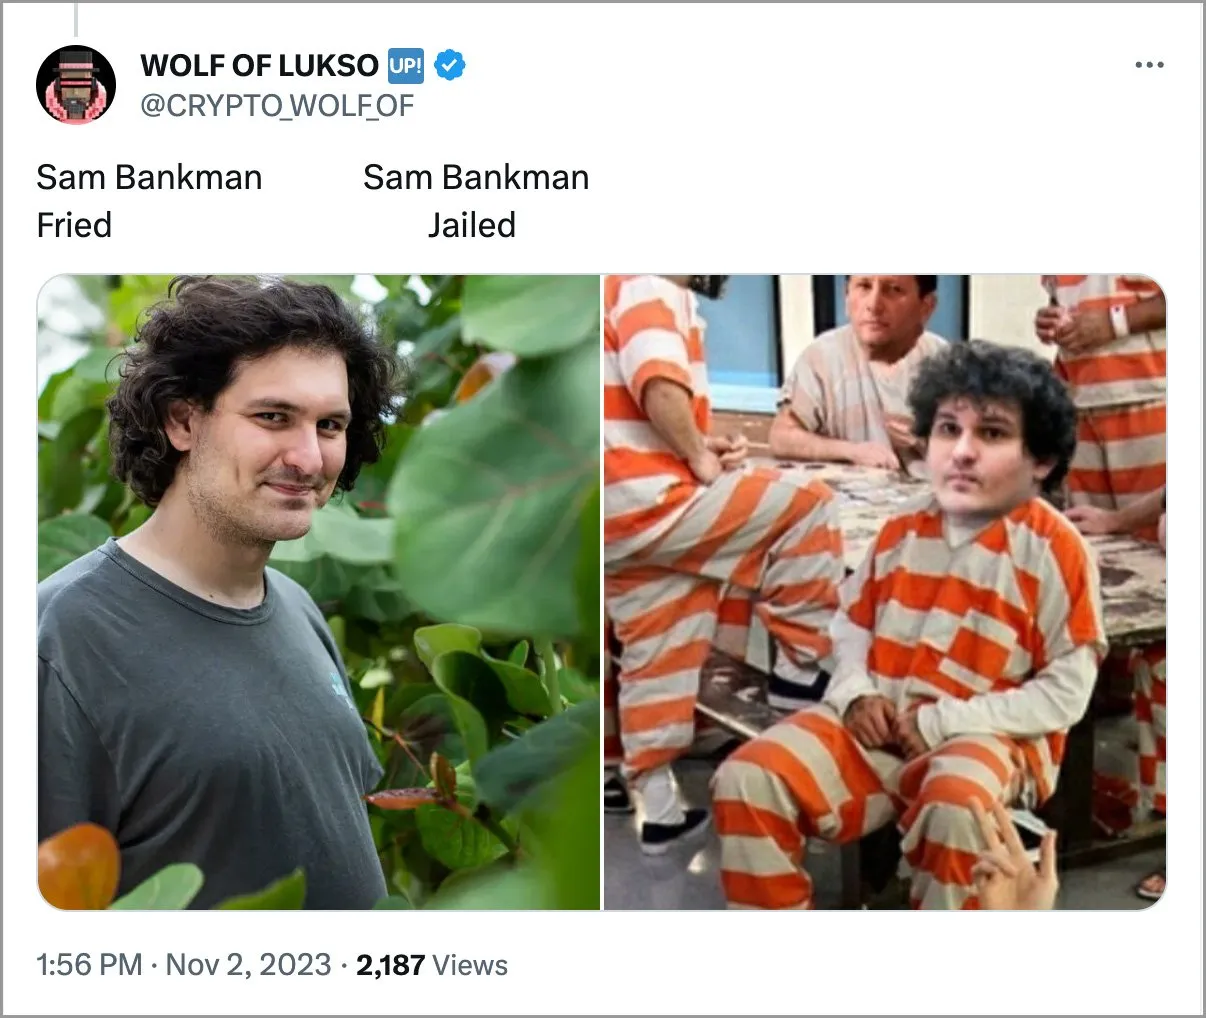 Sam Bankman preso